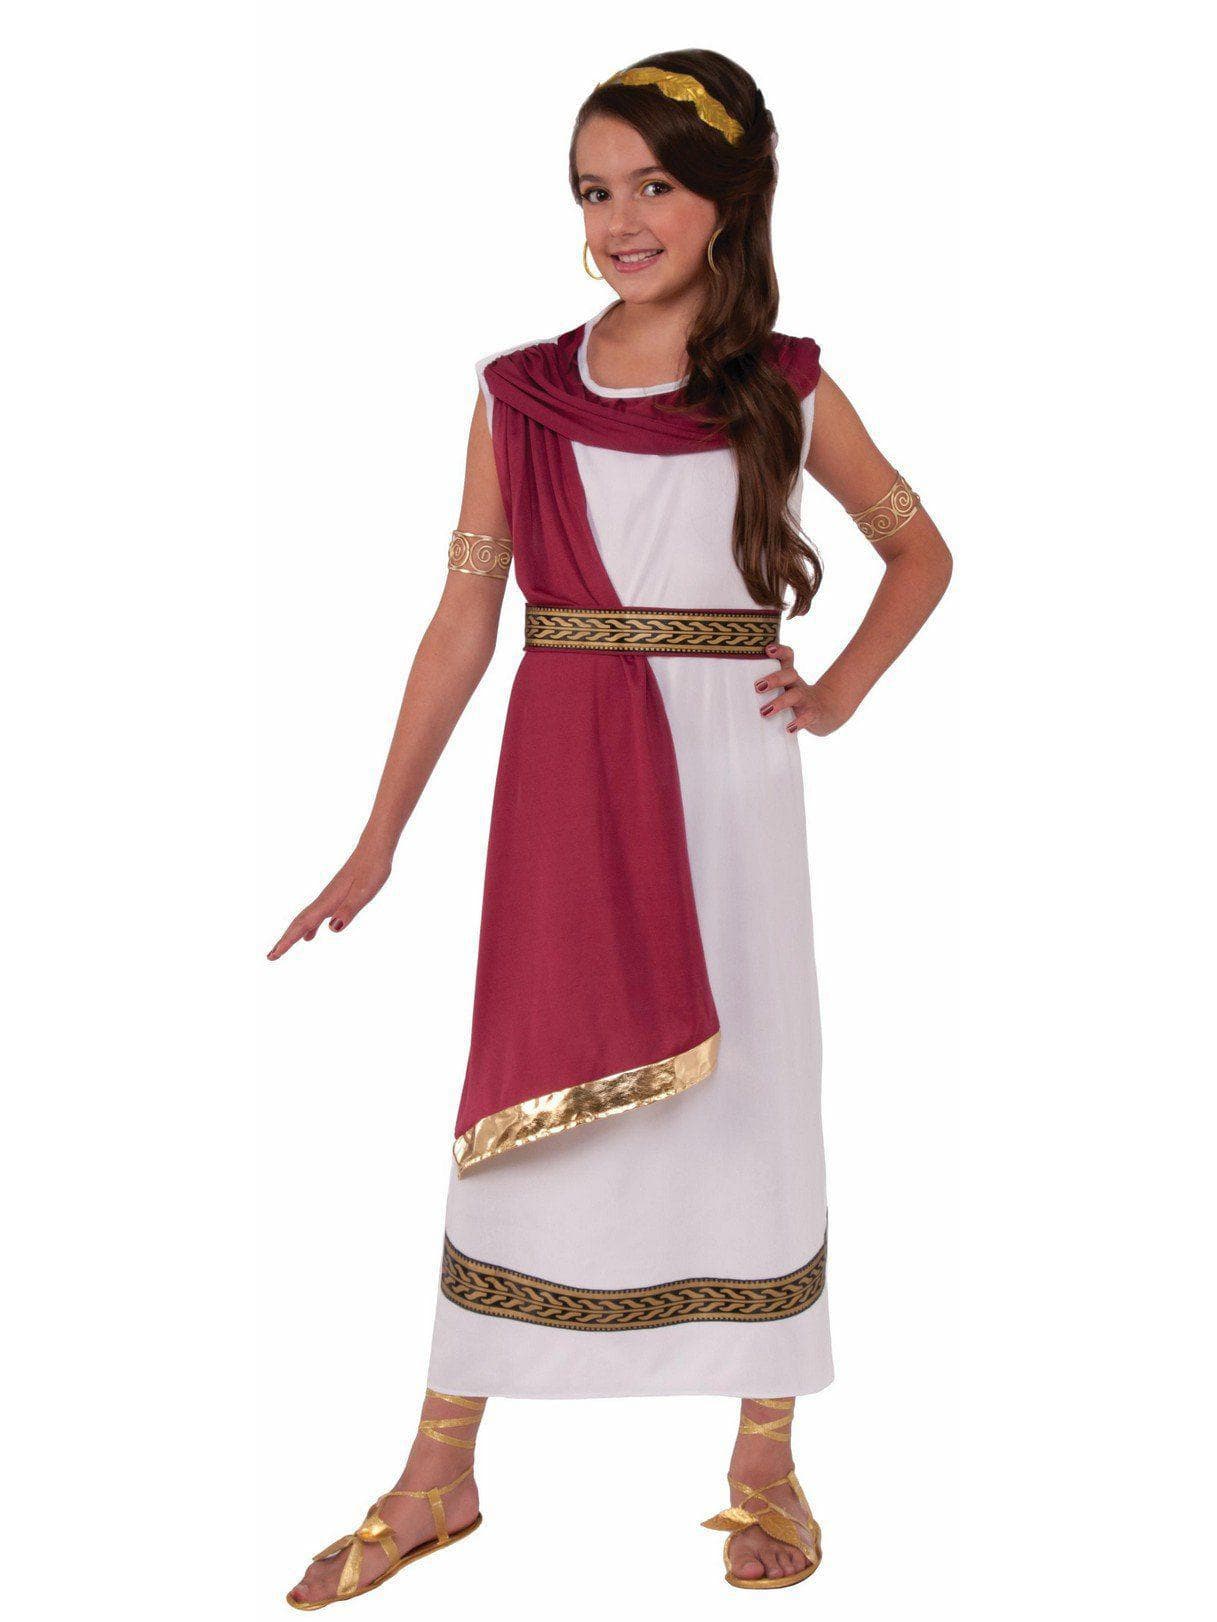 Kid's Greek Goddess Costume - costumes.com